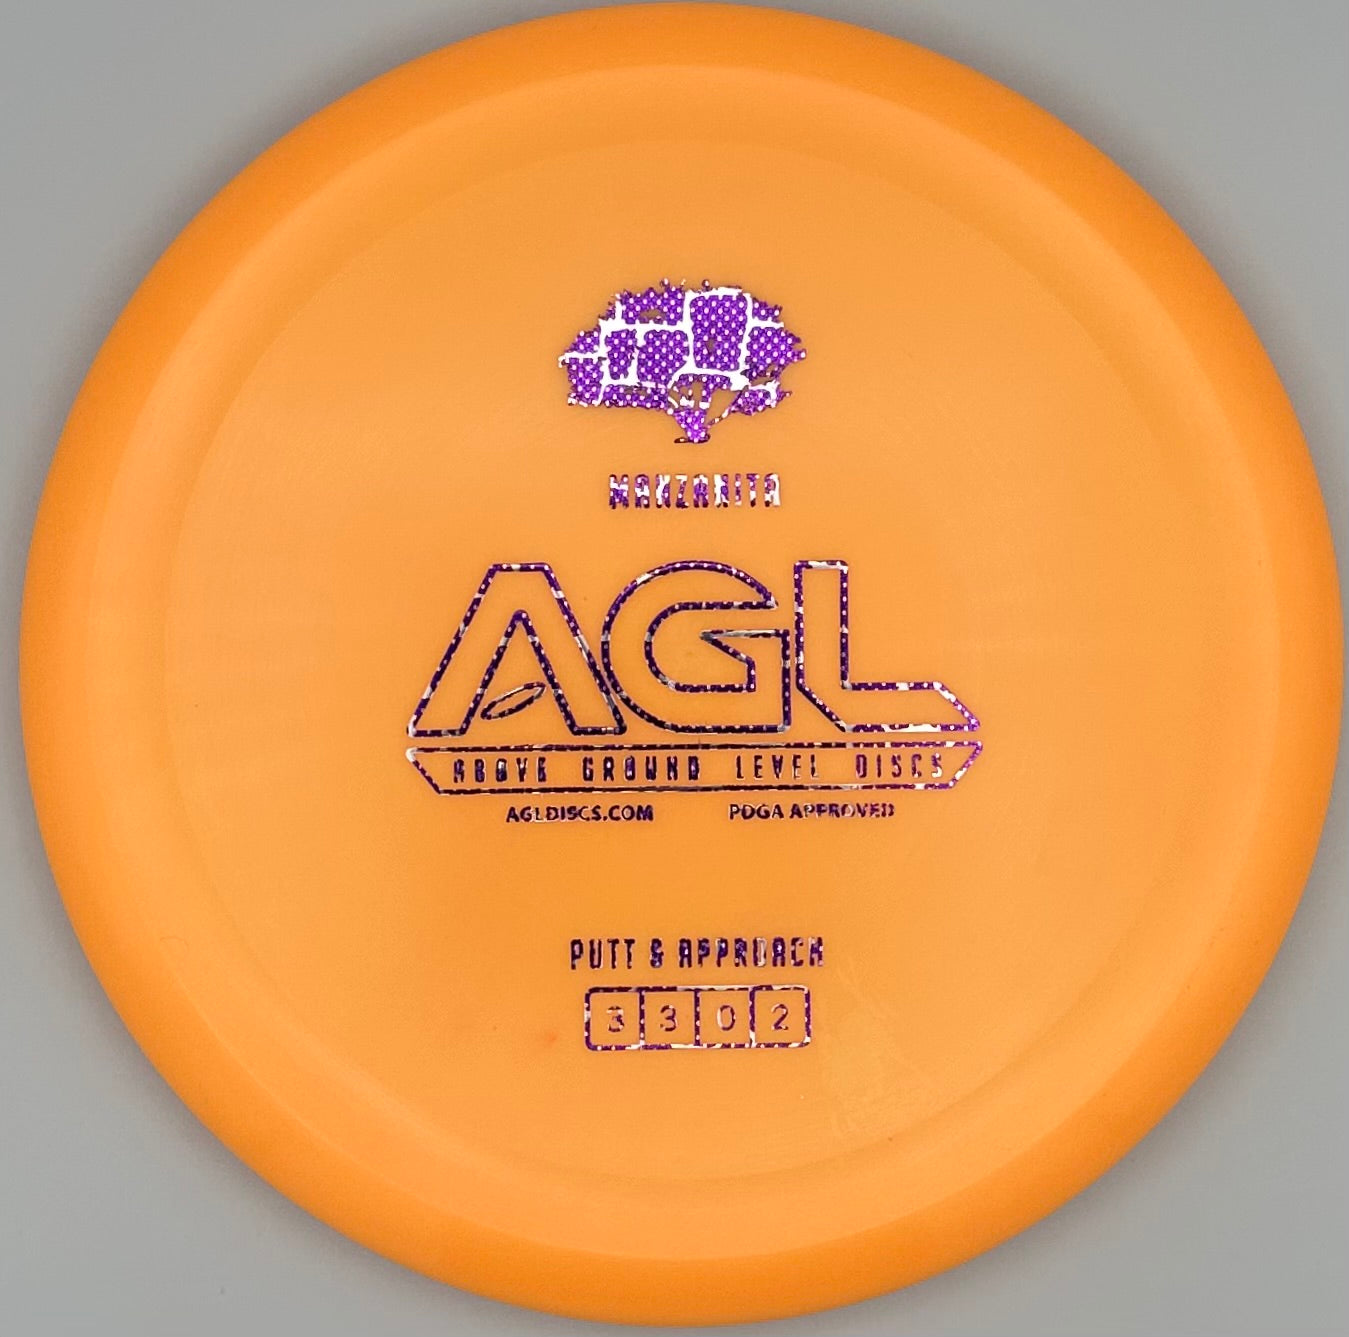 AGL Discs - Soda Pop Orange Alpine Manzanita (Stamped by Gateway)